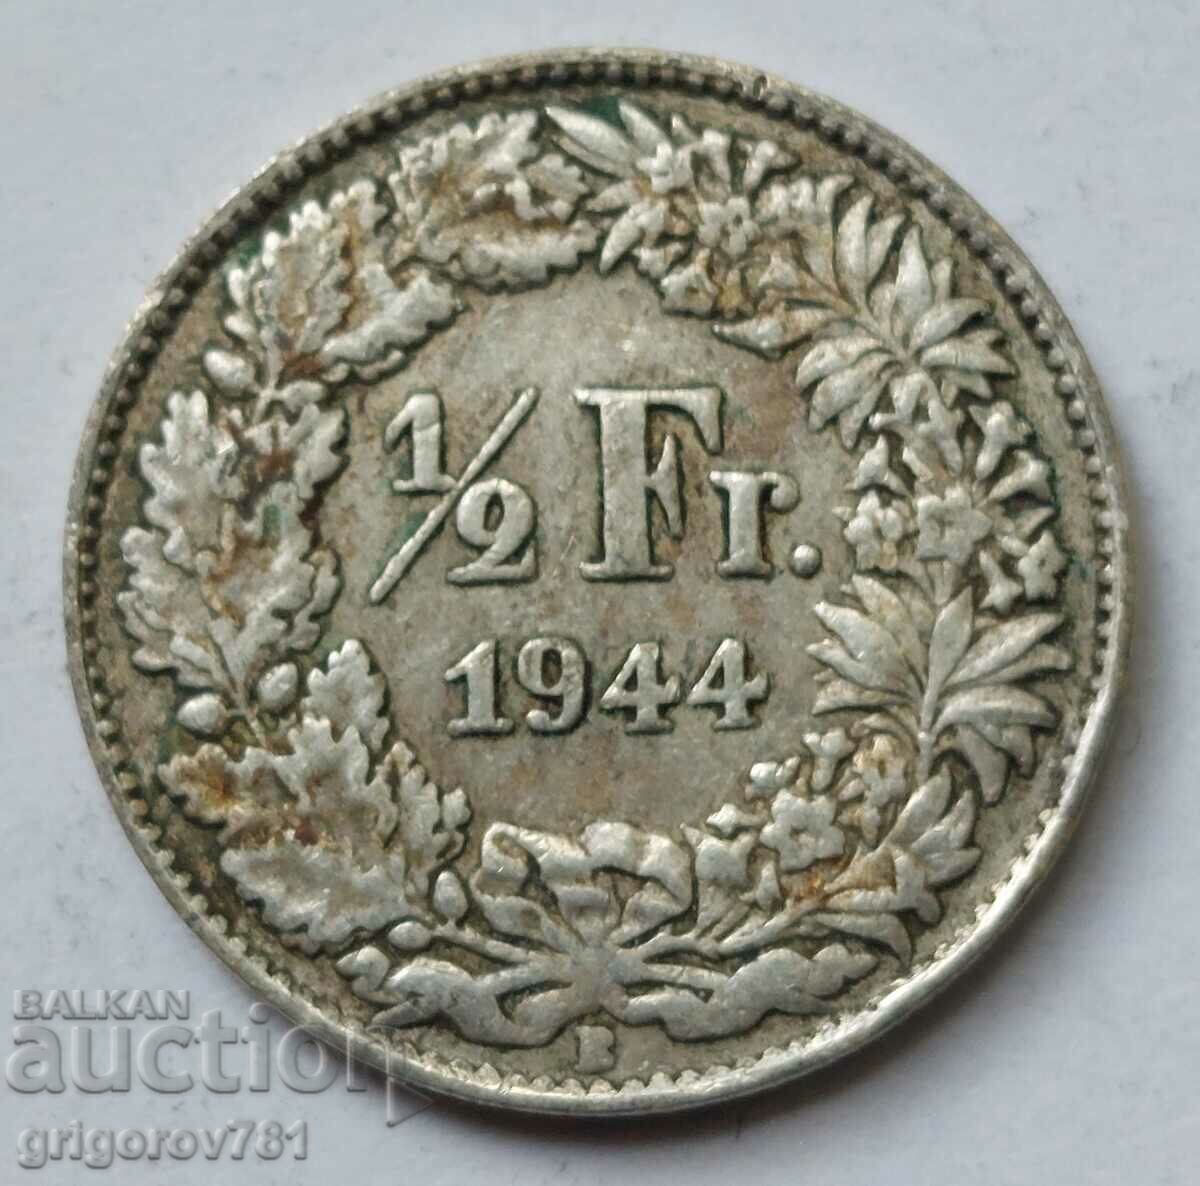 1/2 Franc Silver Switzerland 1944 B - Silver Coin #74